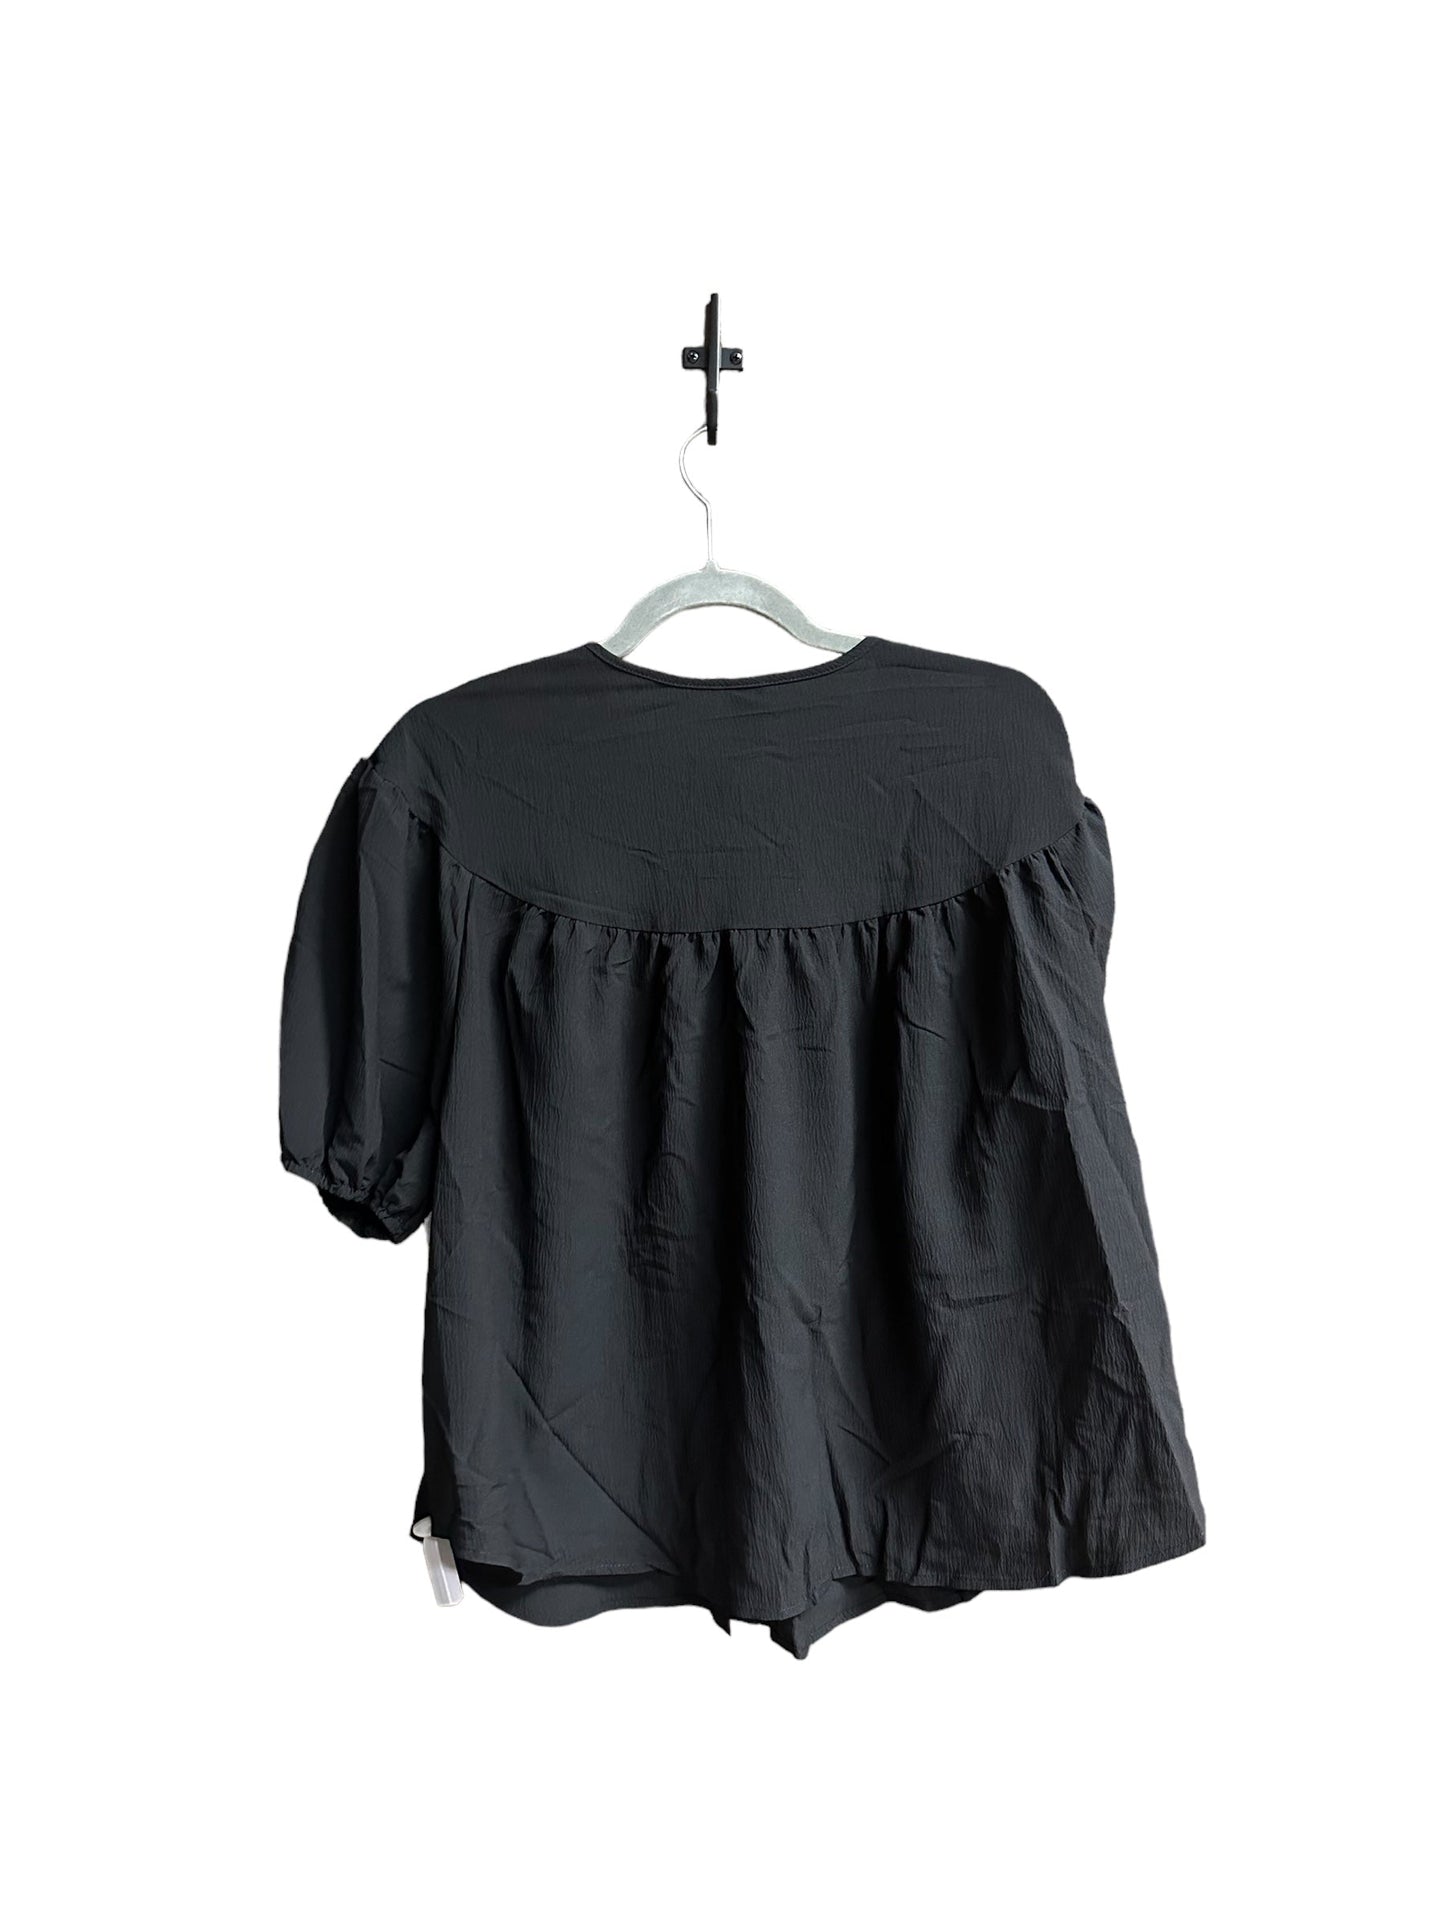 Black Top Short Sleeve Clothes Mentor, Size L